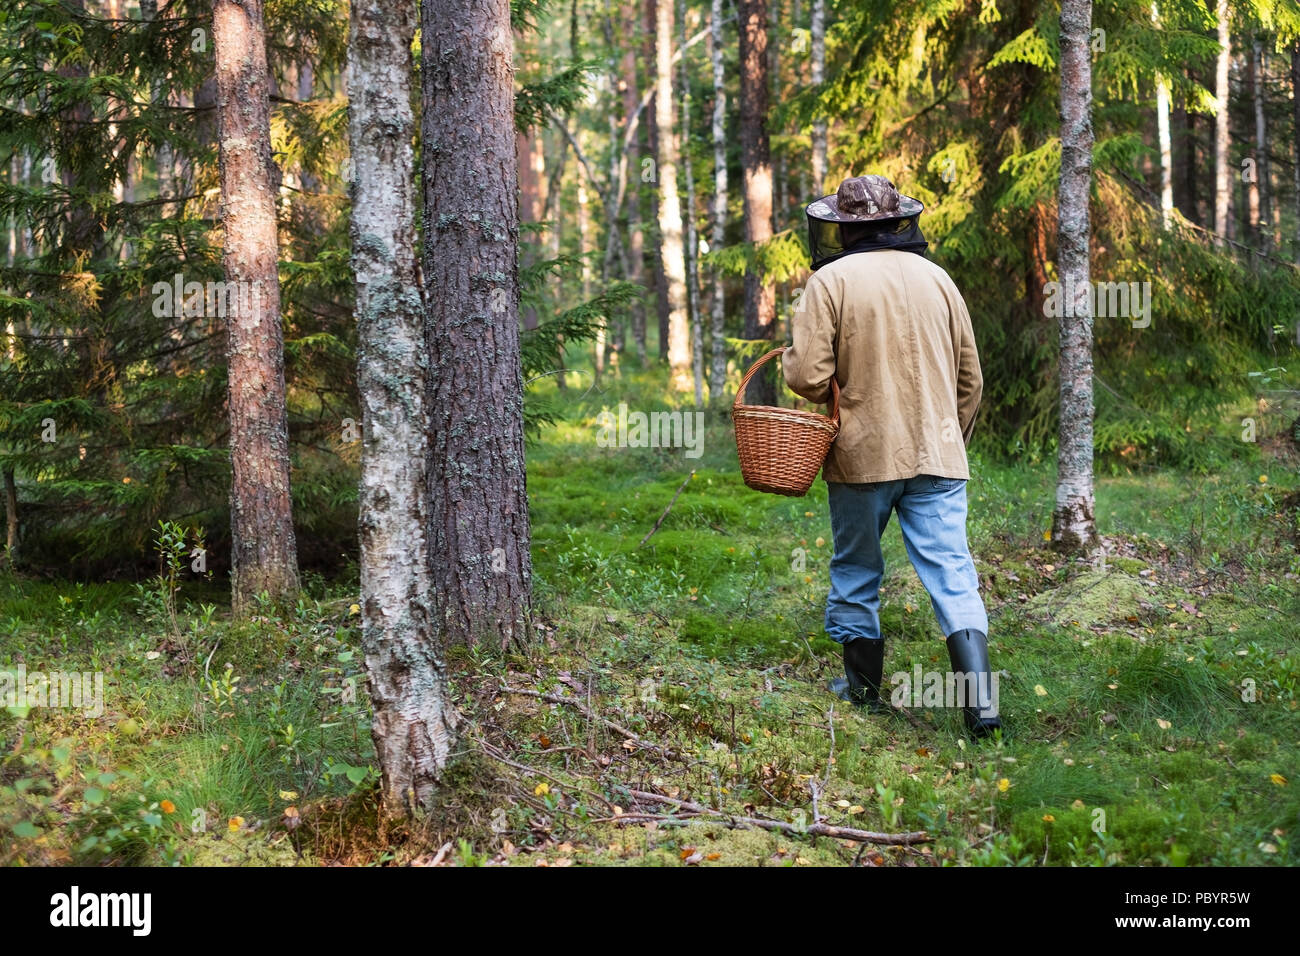 mushroomer collect mushroom on forest Stock Photo